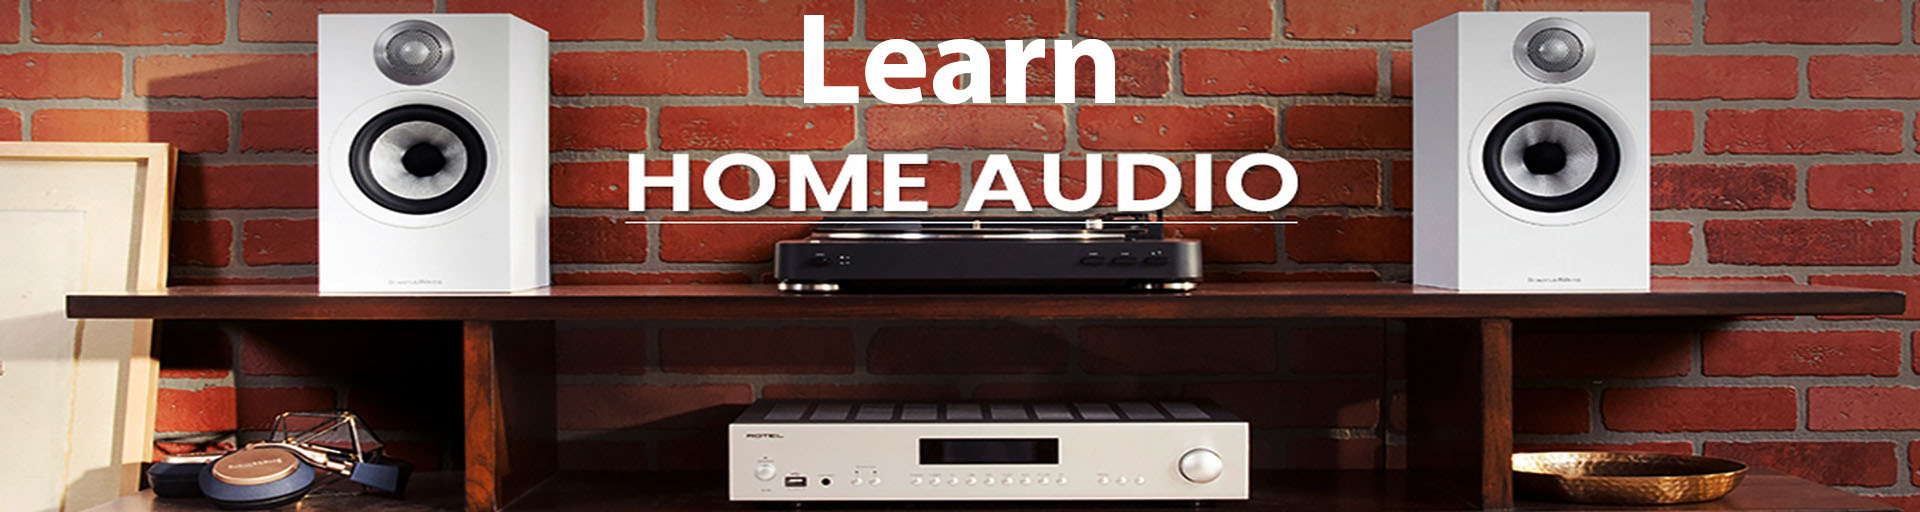 Learn Home Audio